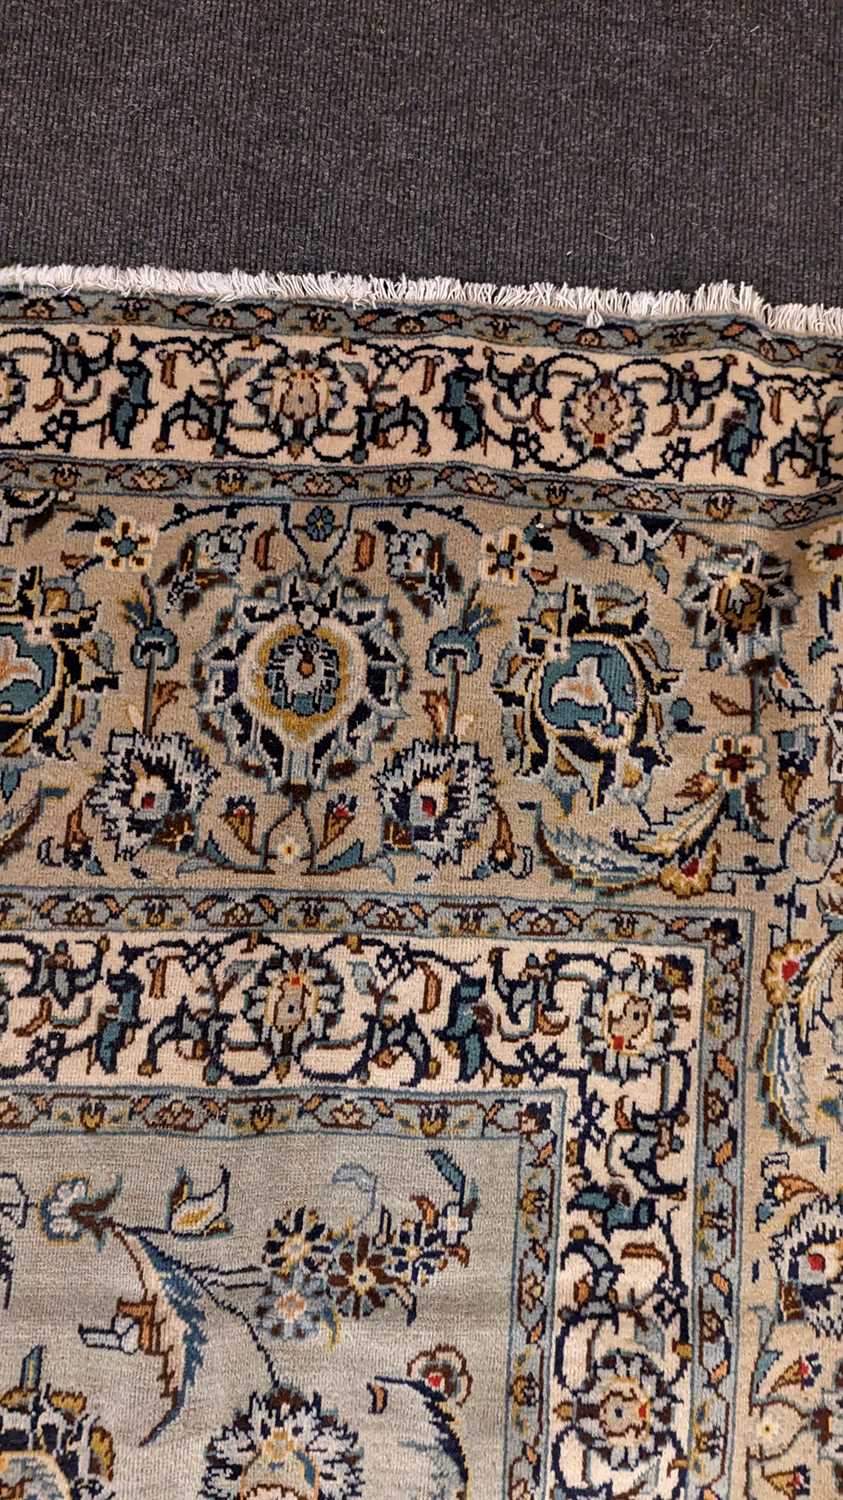 A Kashan carpet - Image 16 of 36